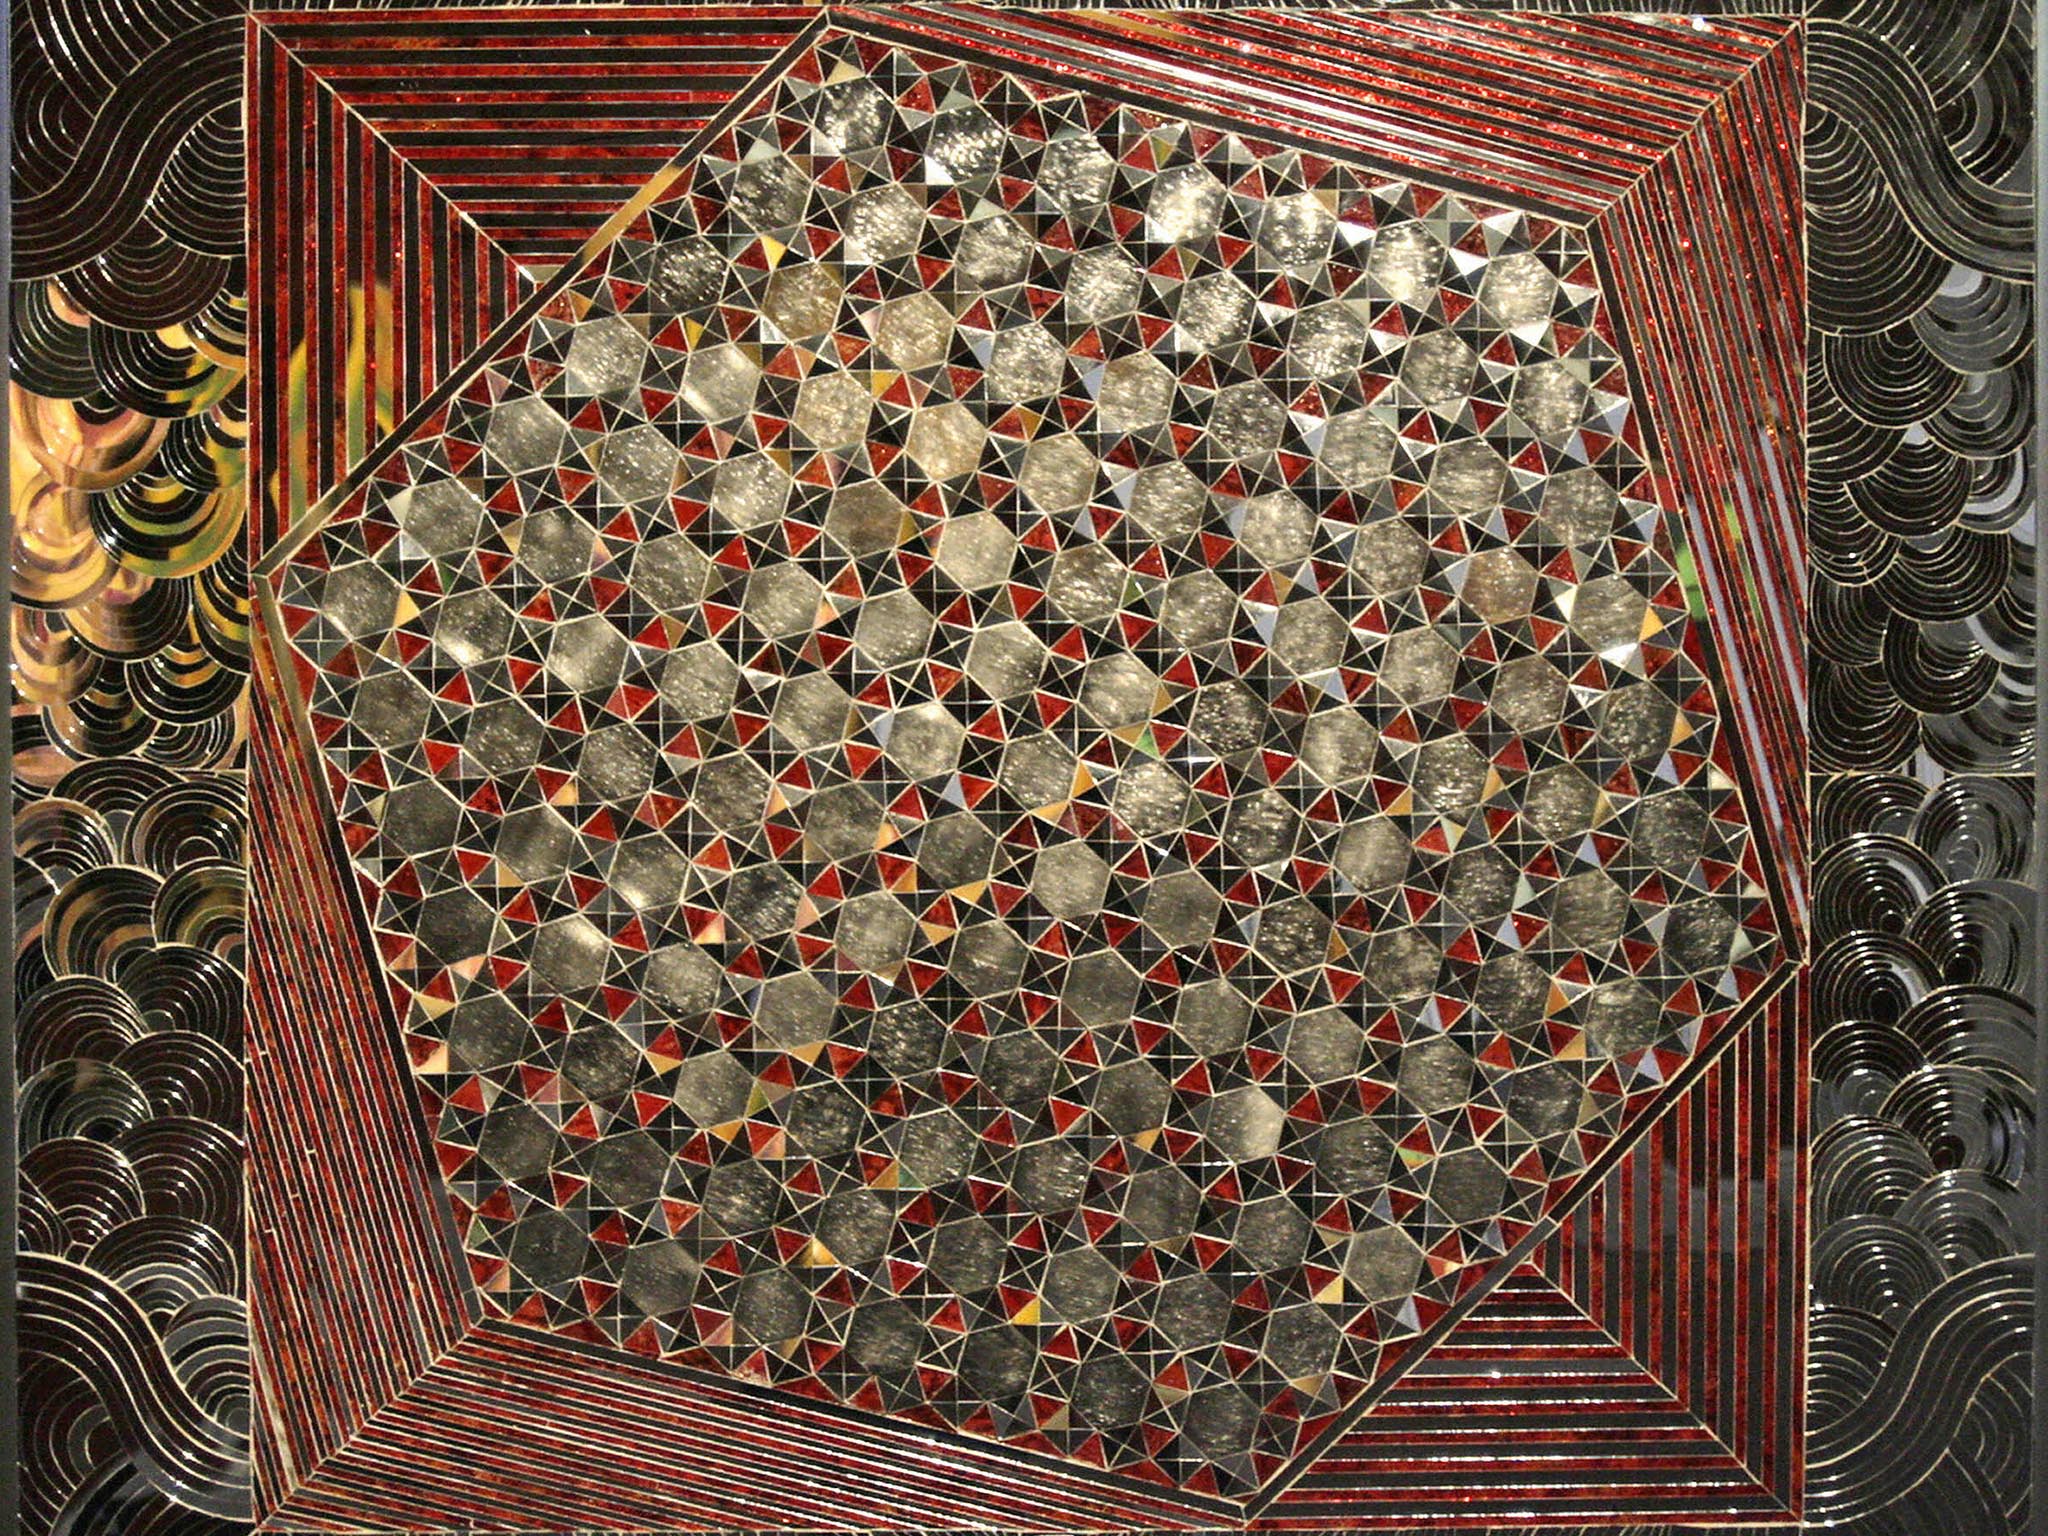 Farmanfarmaian’s ‘Variations on Hexagon of Octagon Mirrors, 2005’